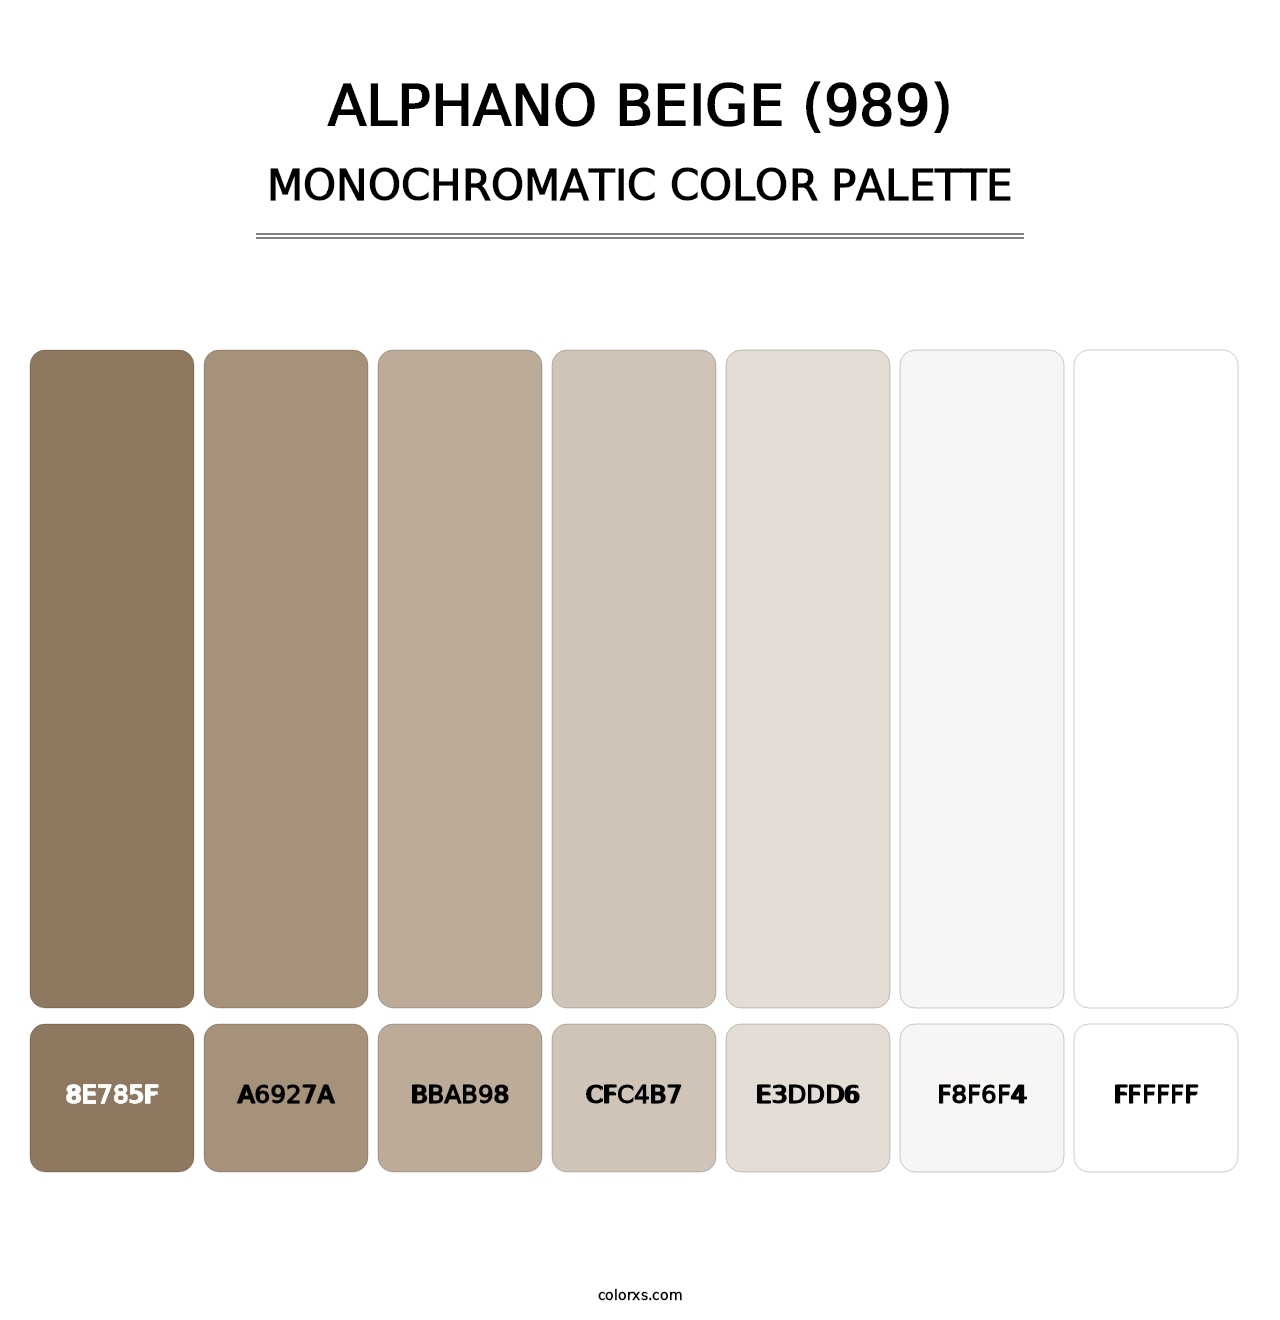 Alphano Beige (989) - Monochromatic Color Palette